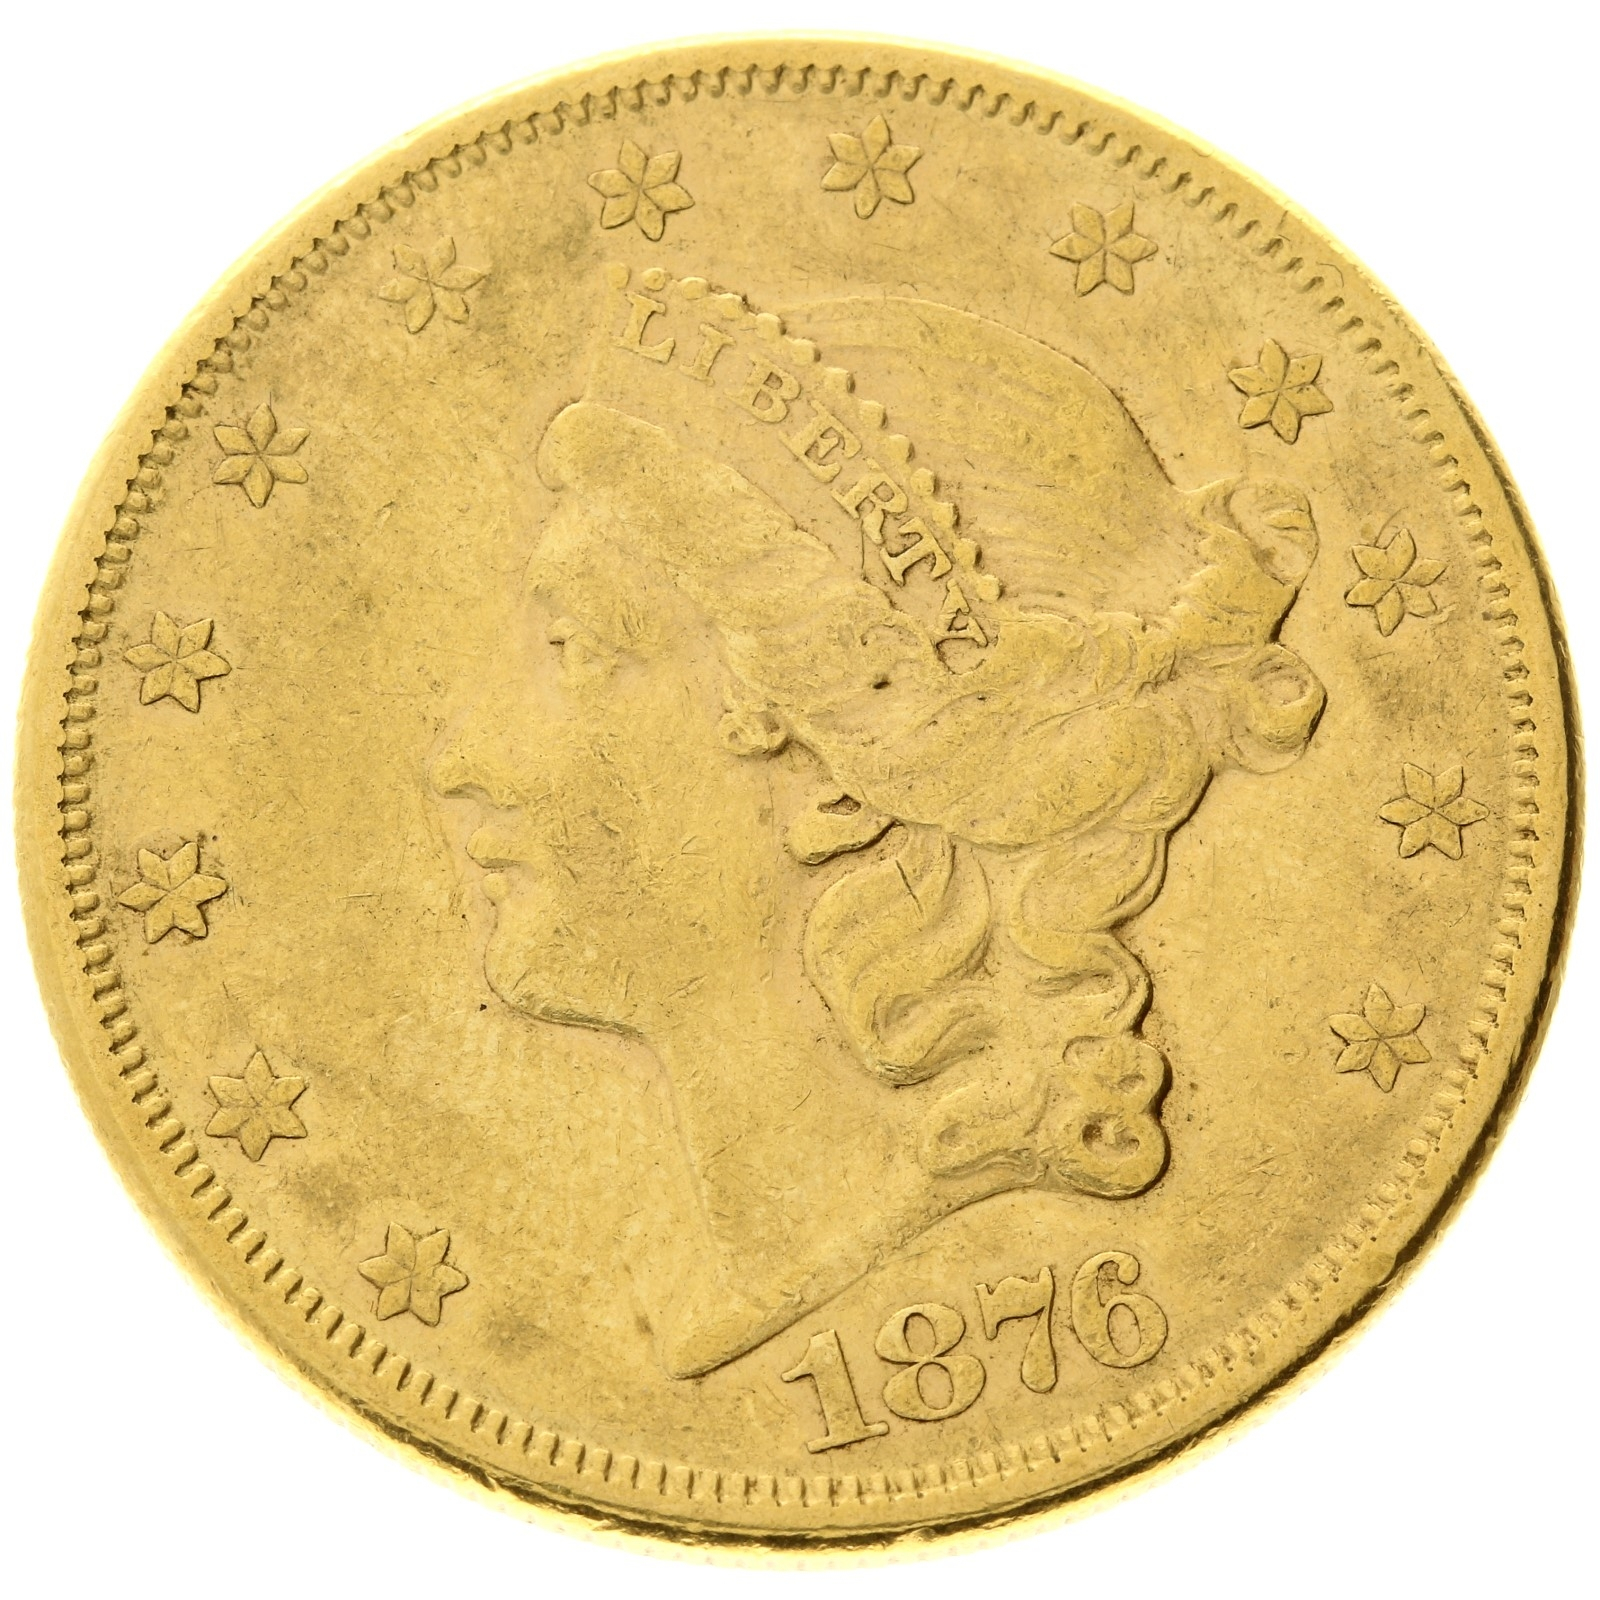 USA - 20 dollars 1876 - S - Liberty head 